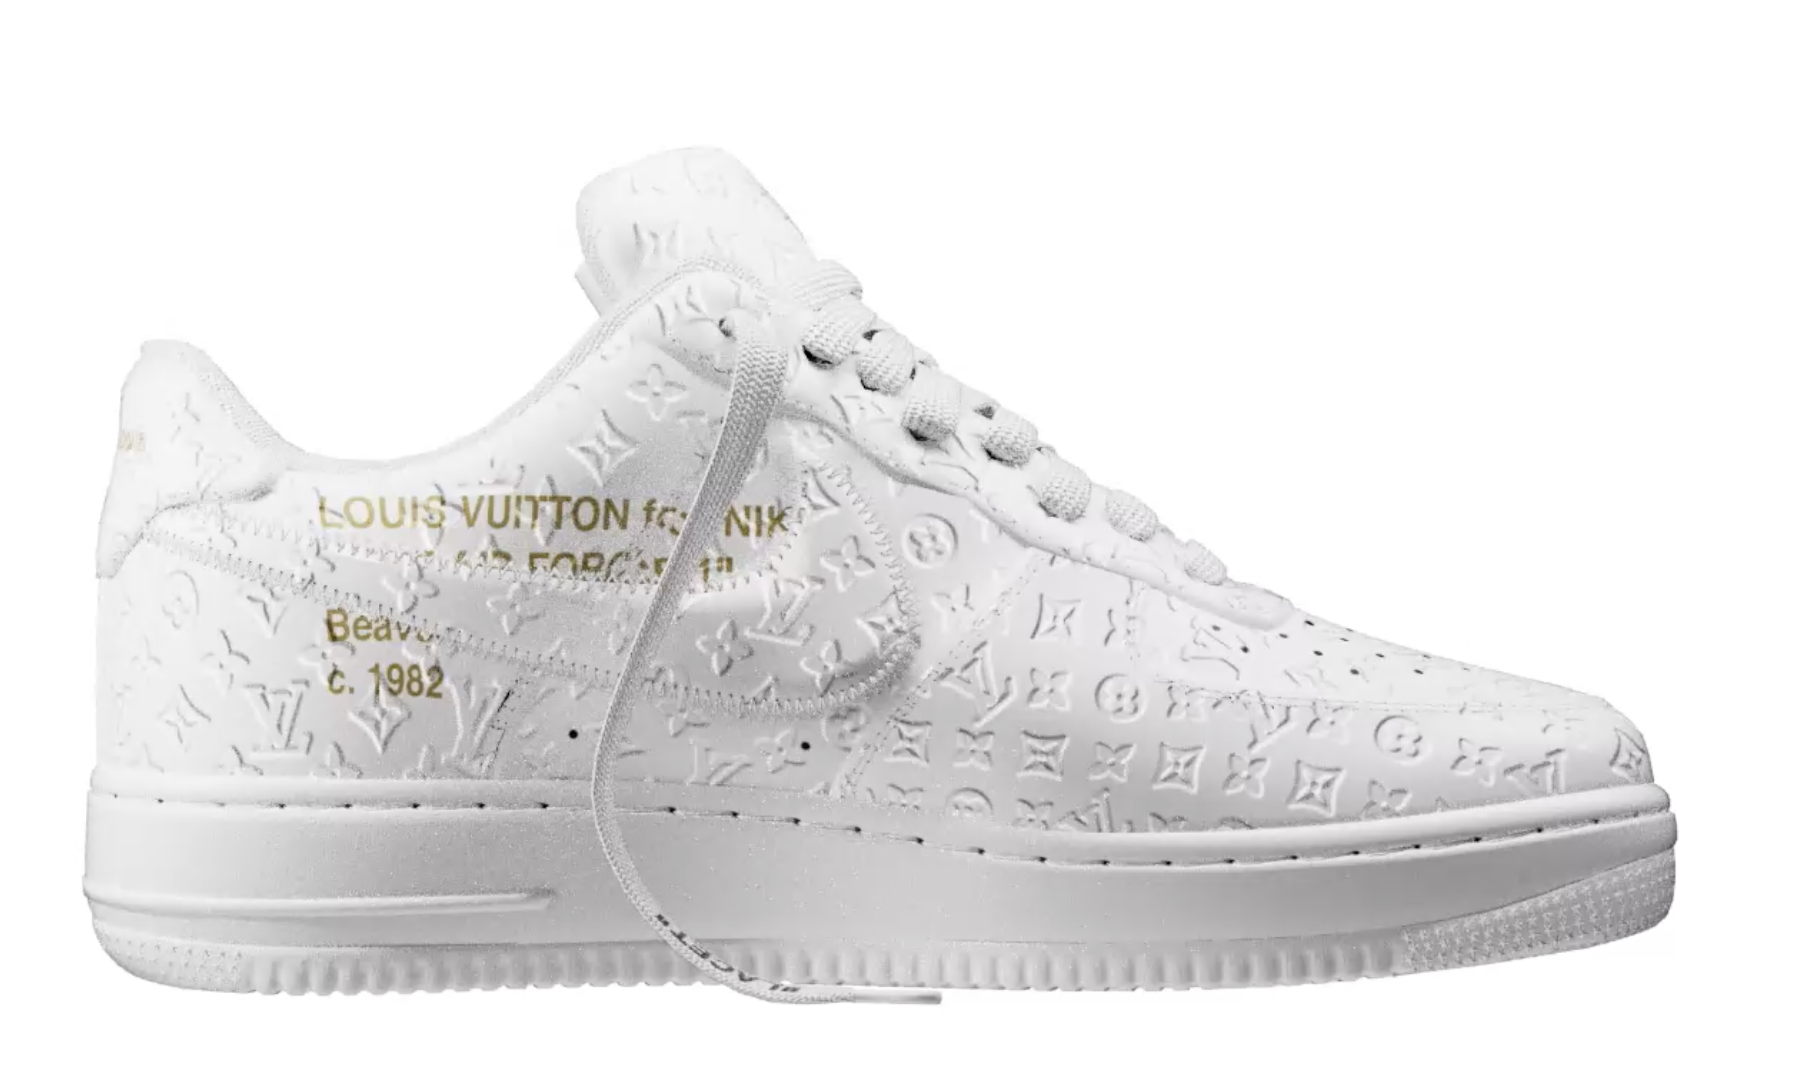 Louis Vuitton x Nike Air Force 1 White | Size 8.5